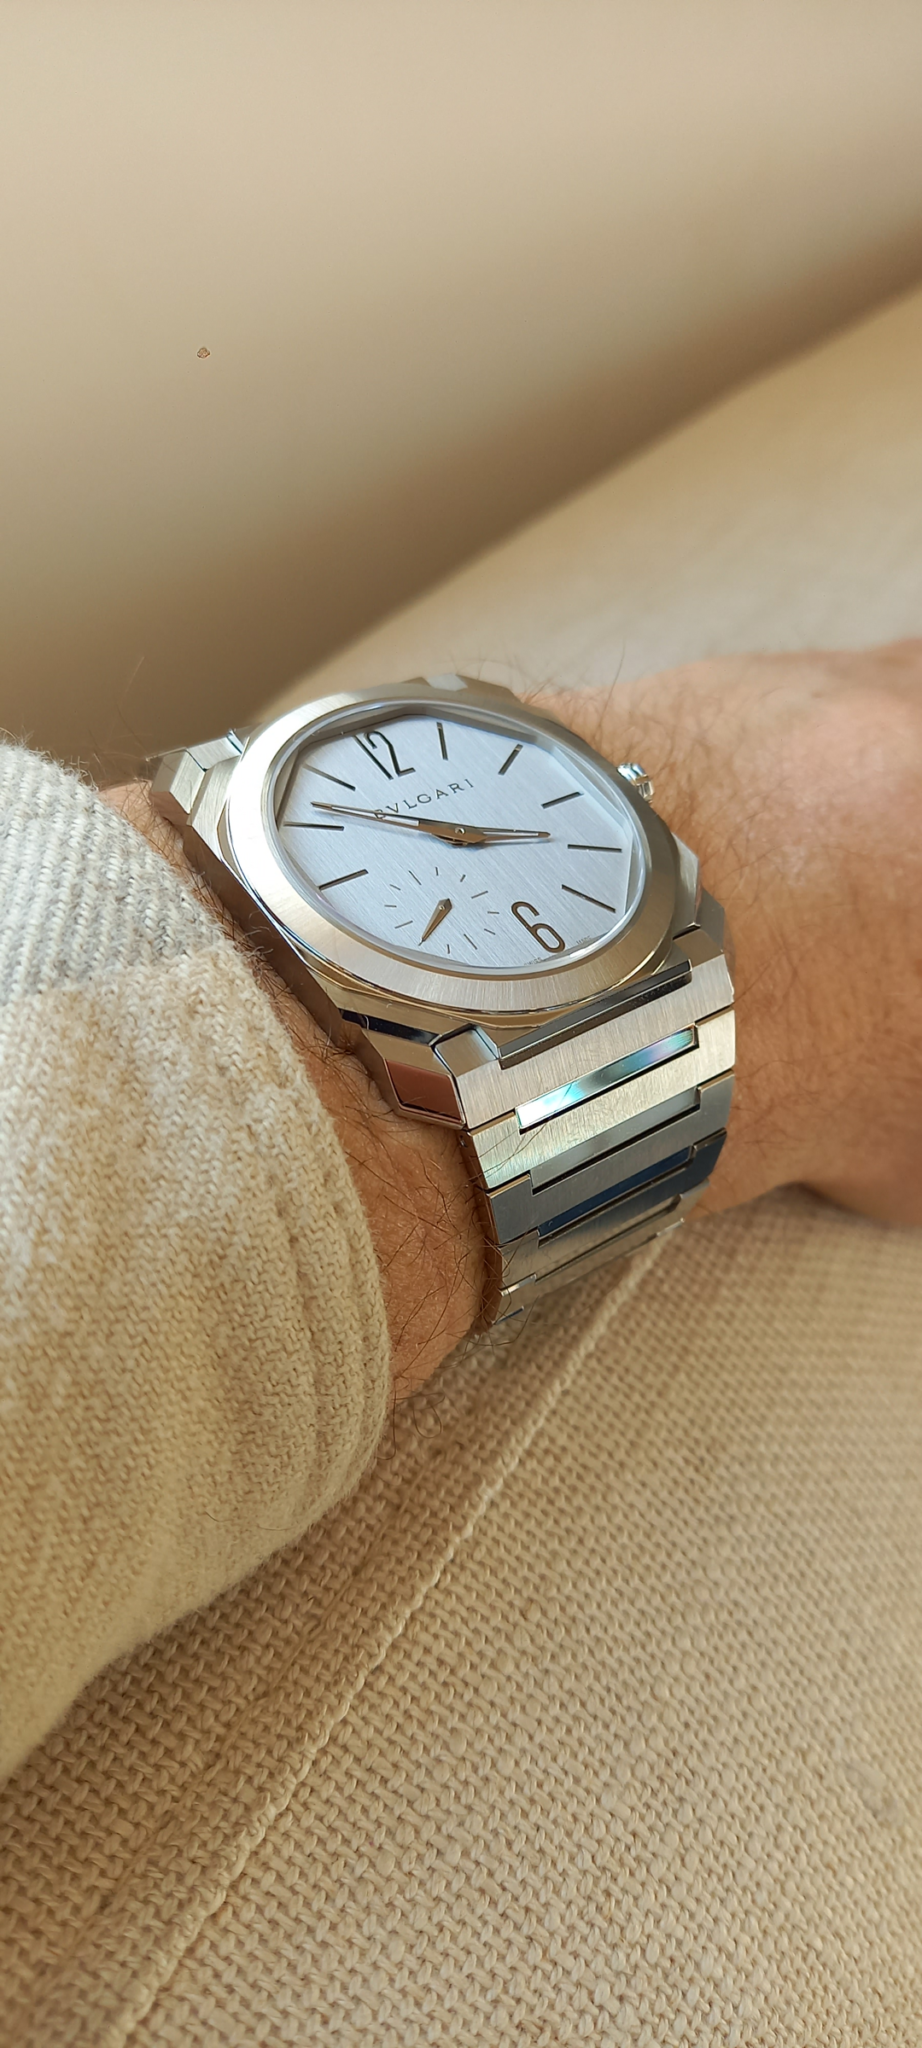 Bvlgari Men's Octo Automatic Wrist Watch